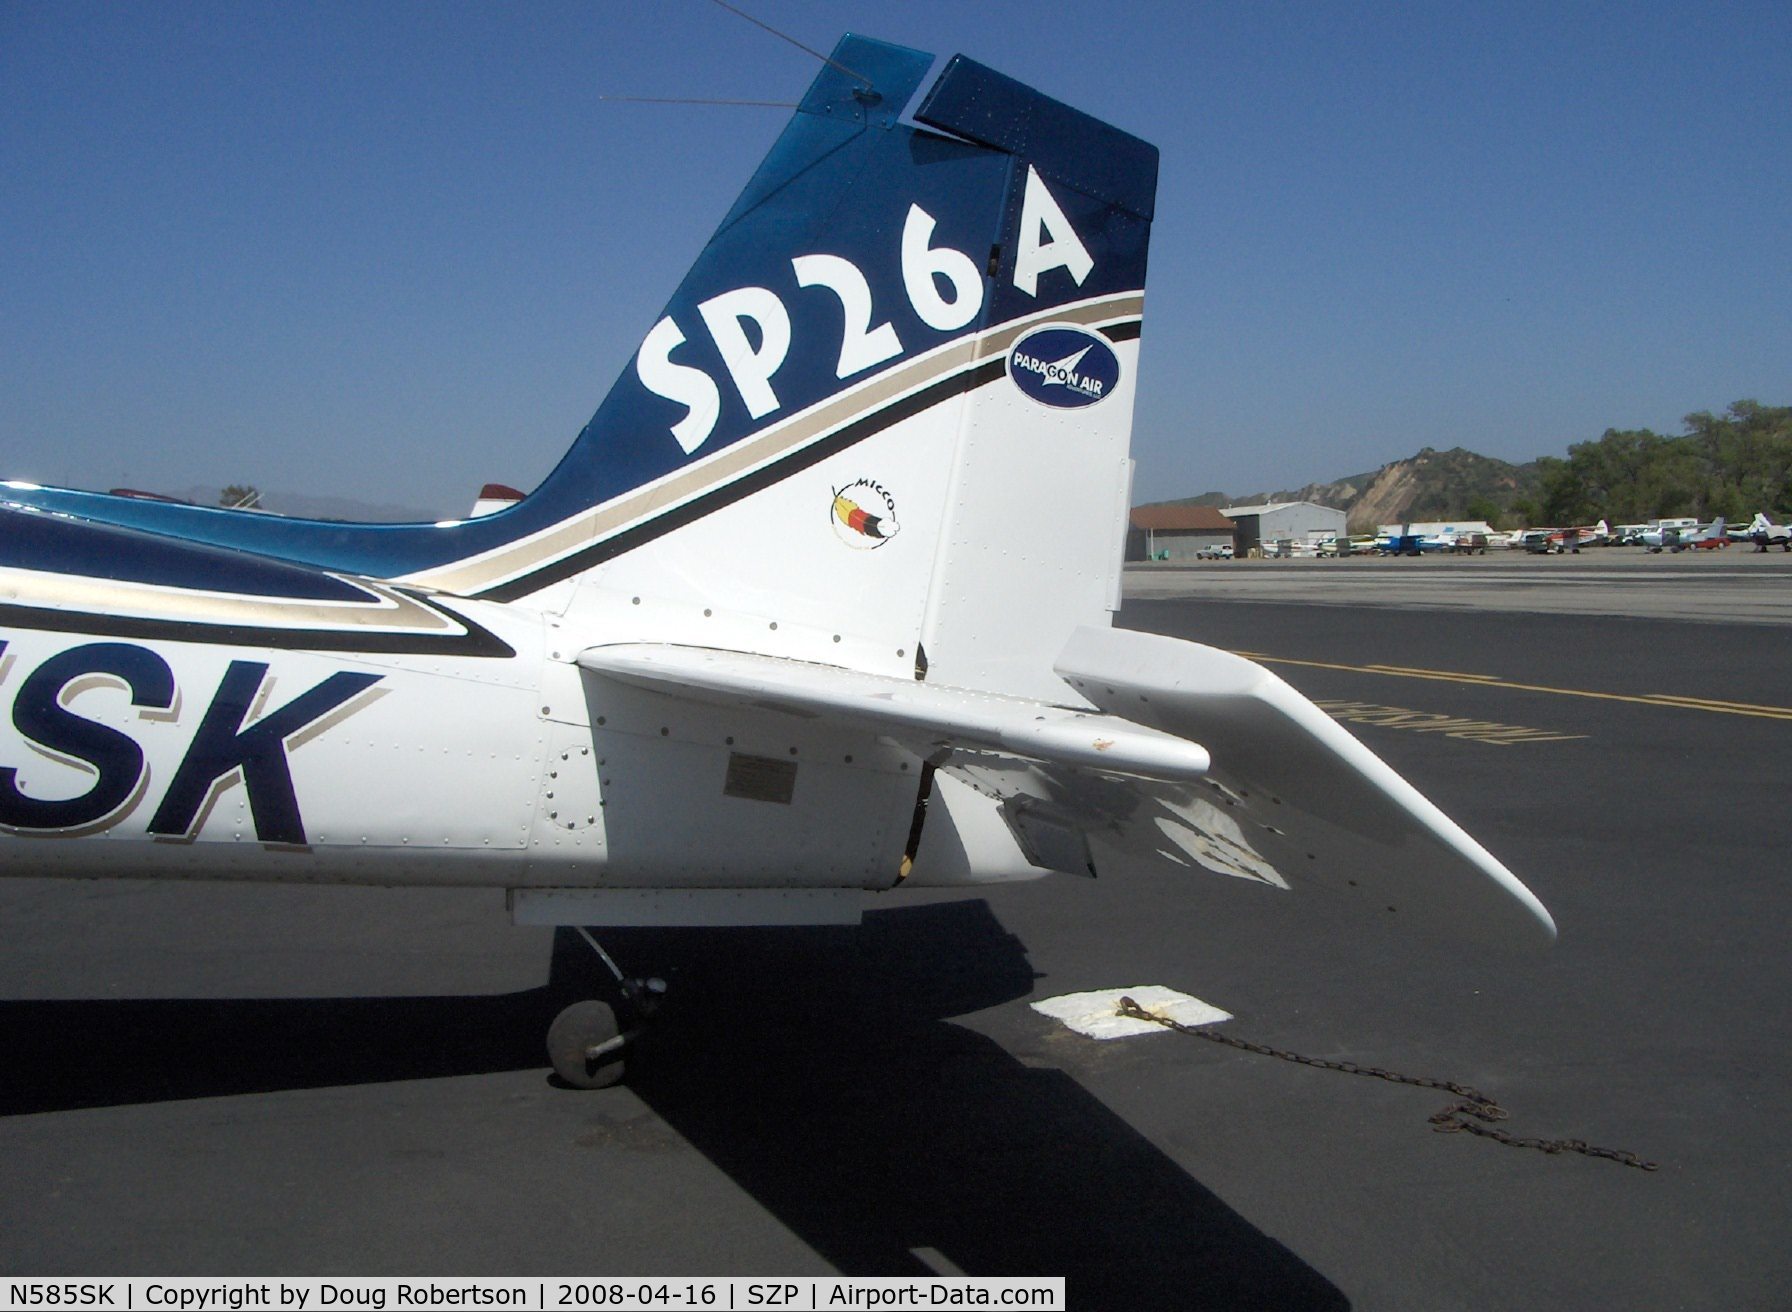 N585SK, 2003 Lanshe Aerospace Llc MAC-145B C/N 260013, 2003 Lanshe Aerospace LLC MAC-145B (Micco SP26A for Aerobatic), Lycoming IO-540 260 Hp, retractible tailwheel